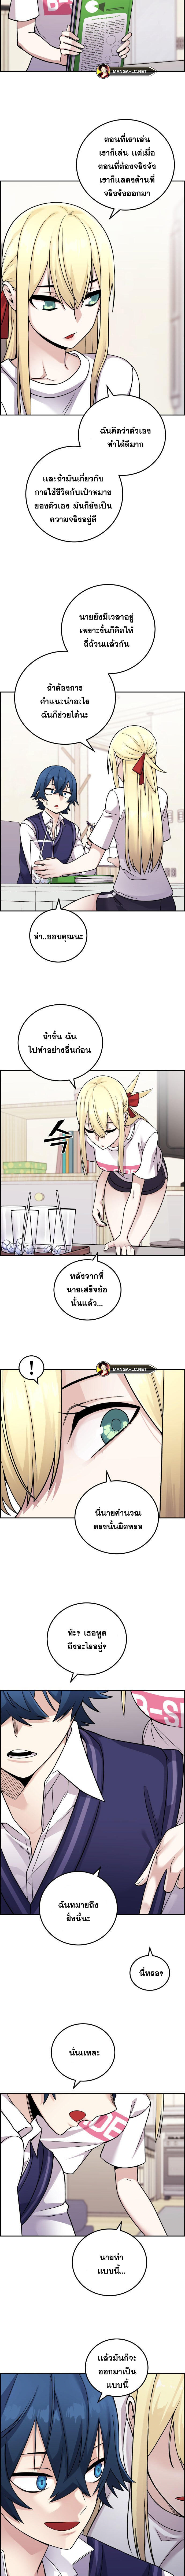 Webtoon Character Na Kang Lim ร ยธโ€ขร ยธยญร ยธโขร ยธโ€”ร ยธยตร ยนห 30 (14)